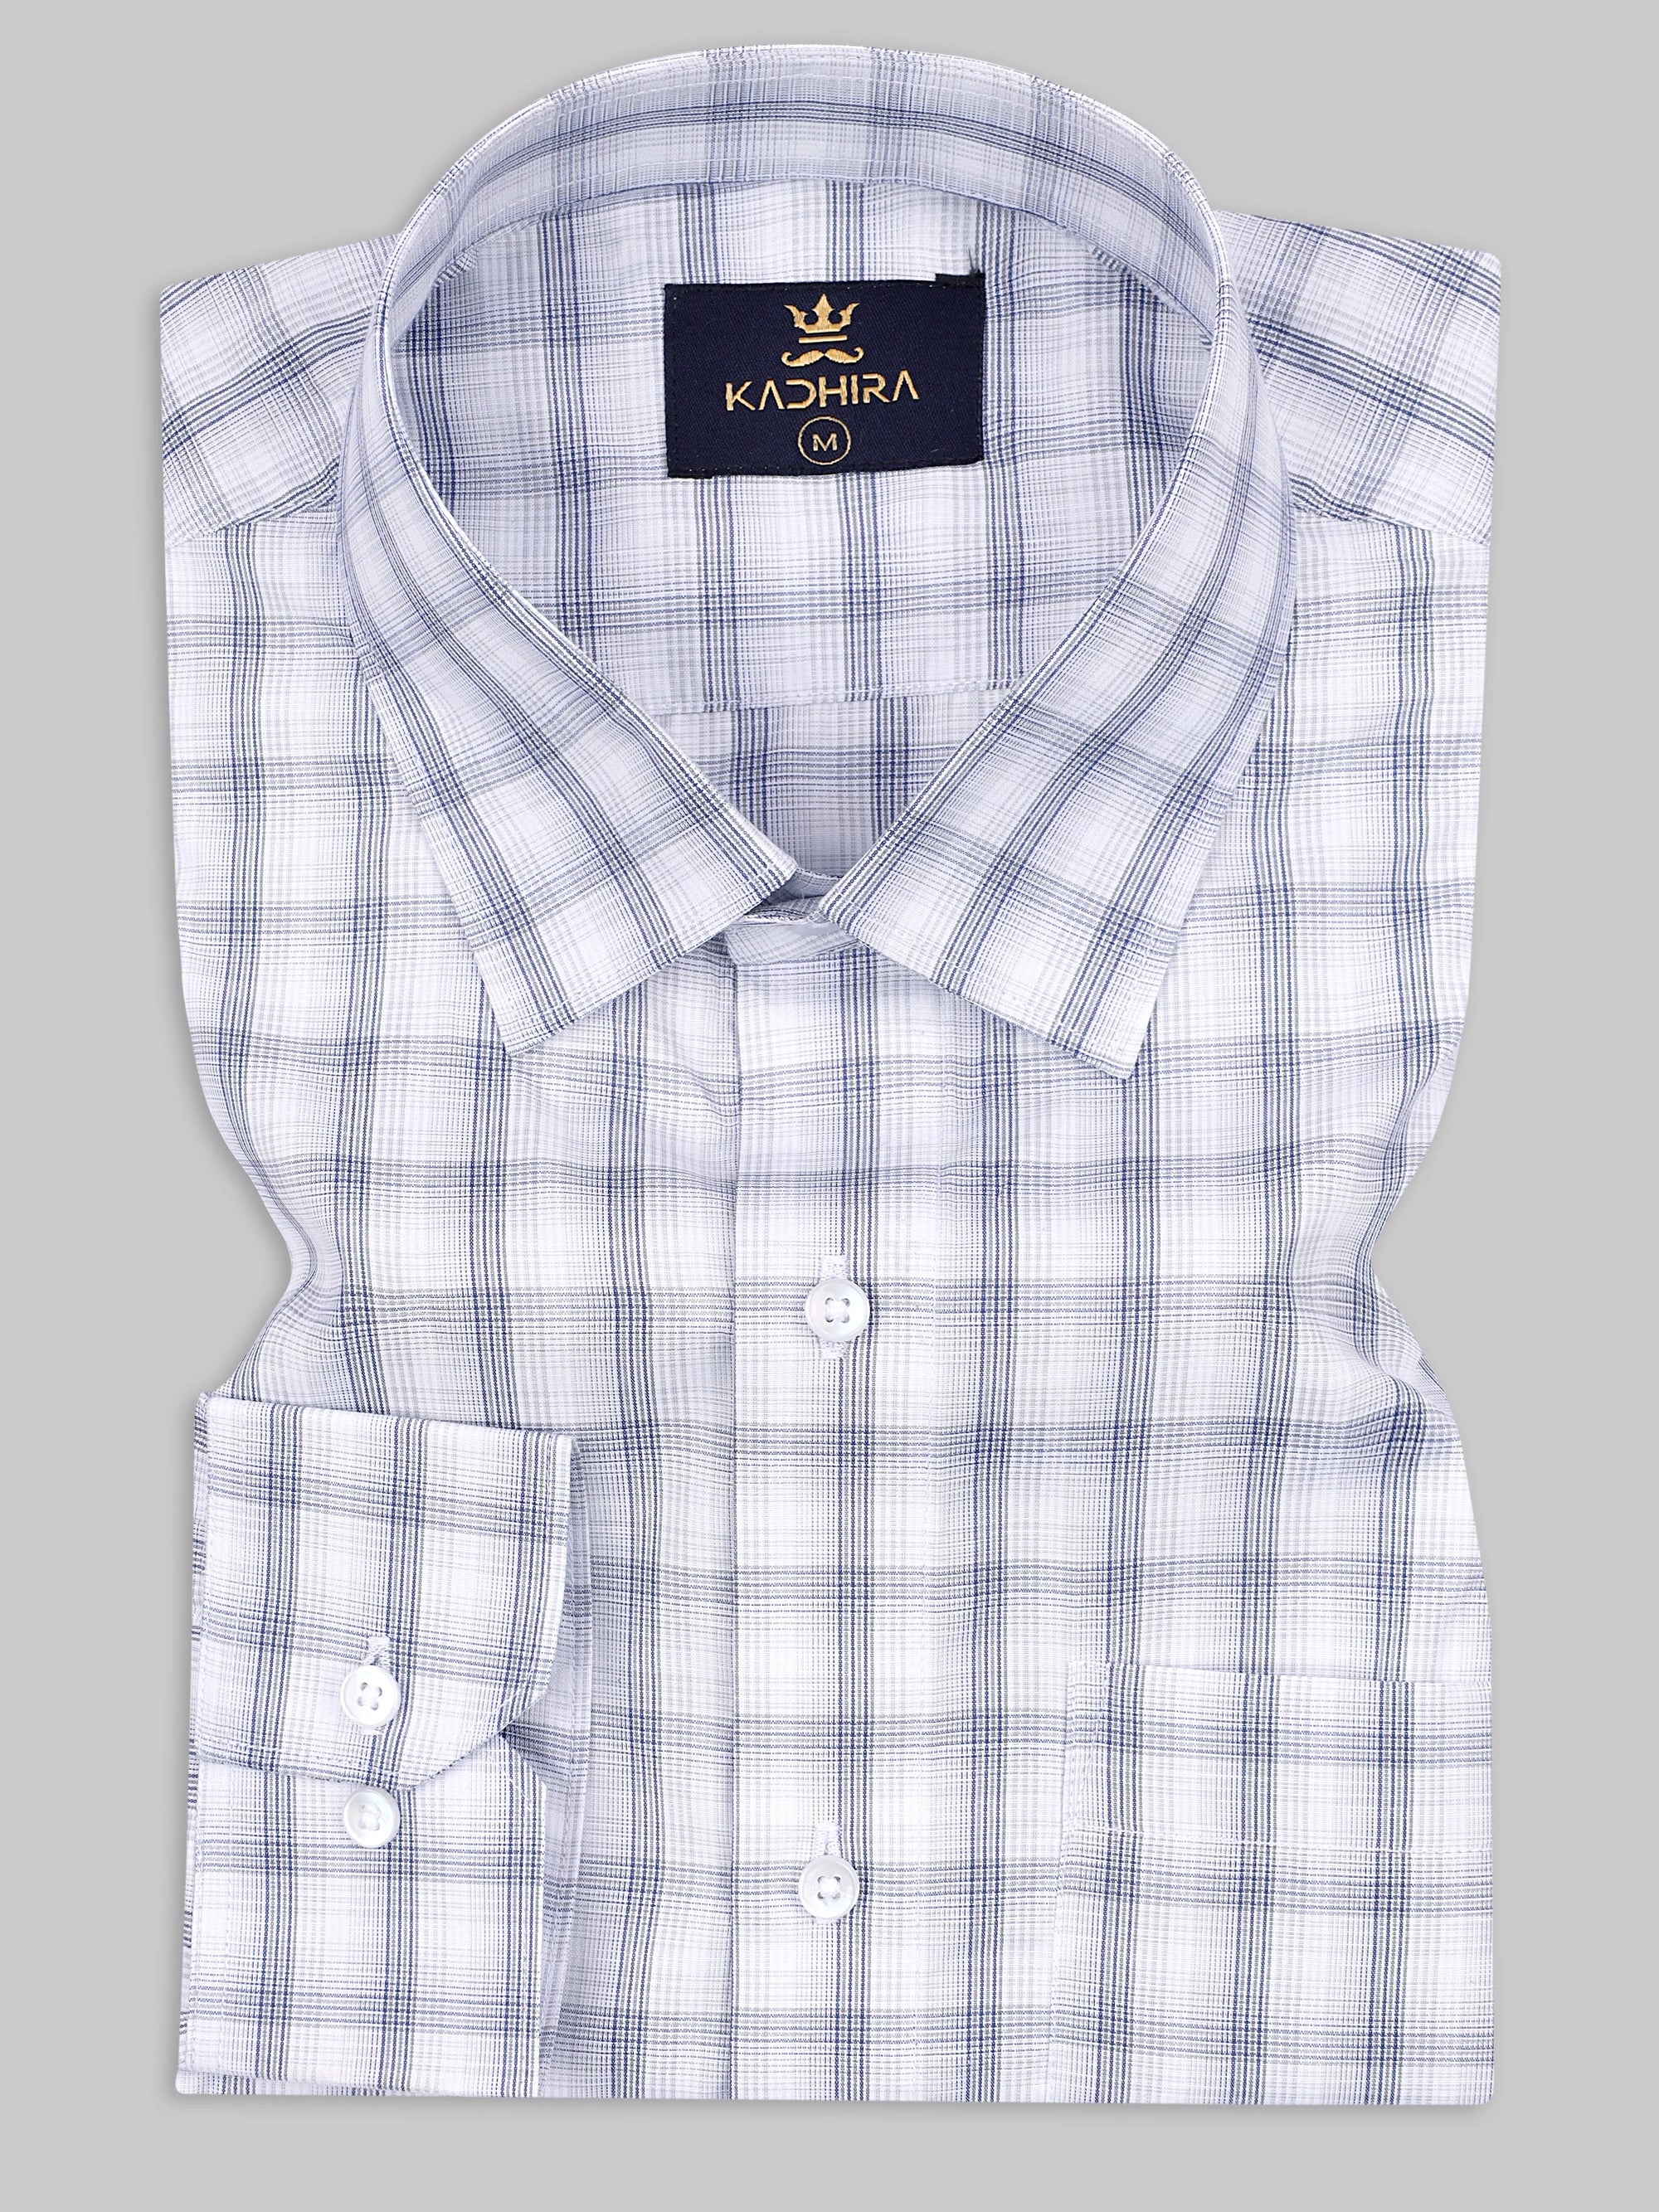 Ash Gray With College Navy Plaid checks Premium Cotton Shirt